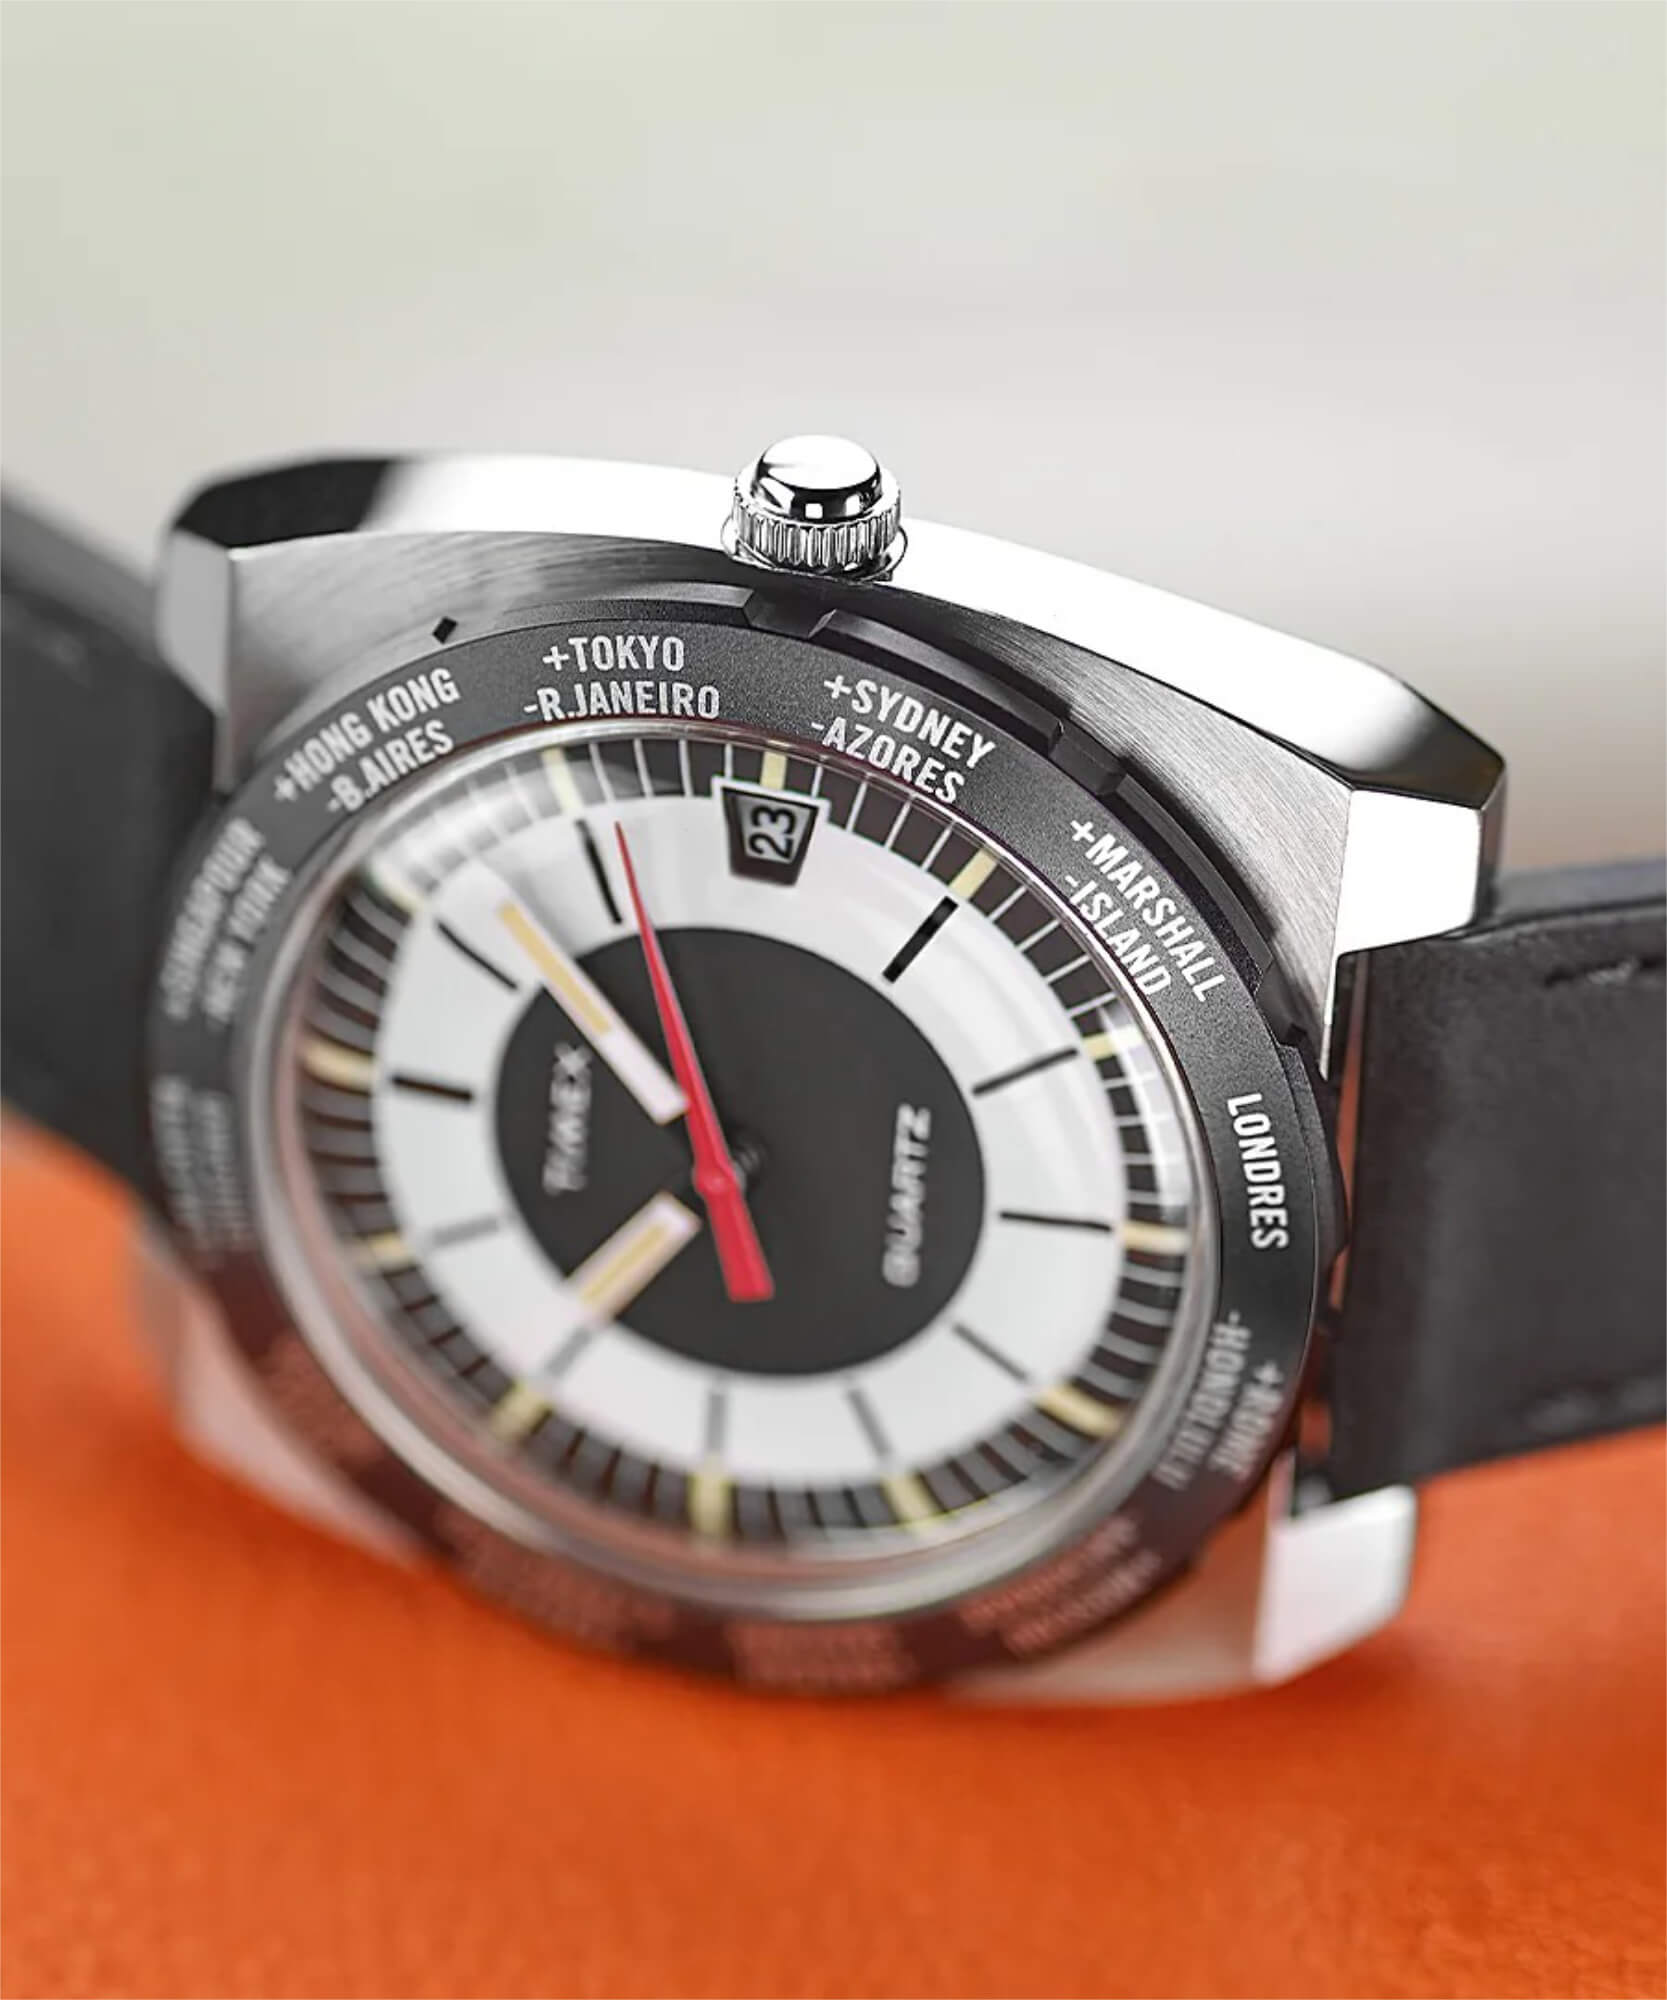 НОВИНКА: Часы Nifty Timex World Time 1972 года